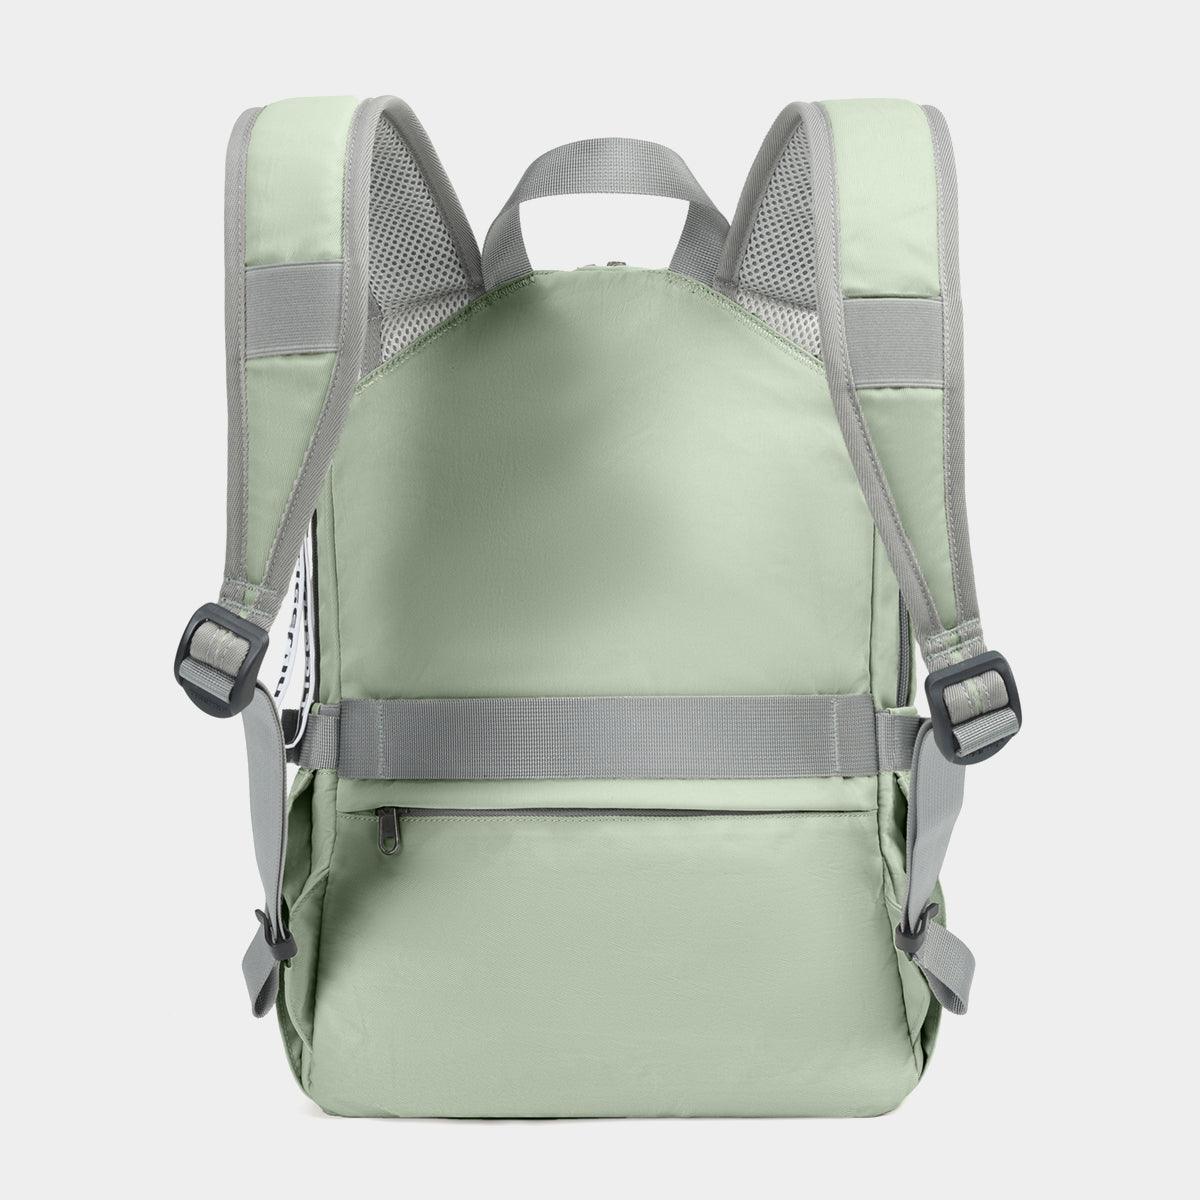 Tigernu T-B9511 Campus School Laptop Backpack Bag